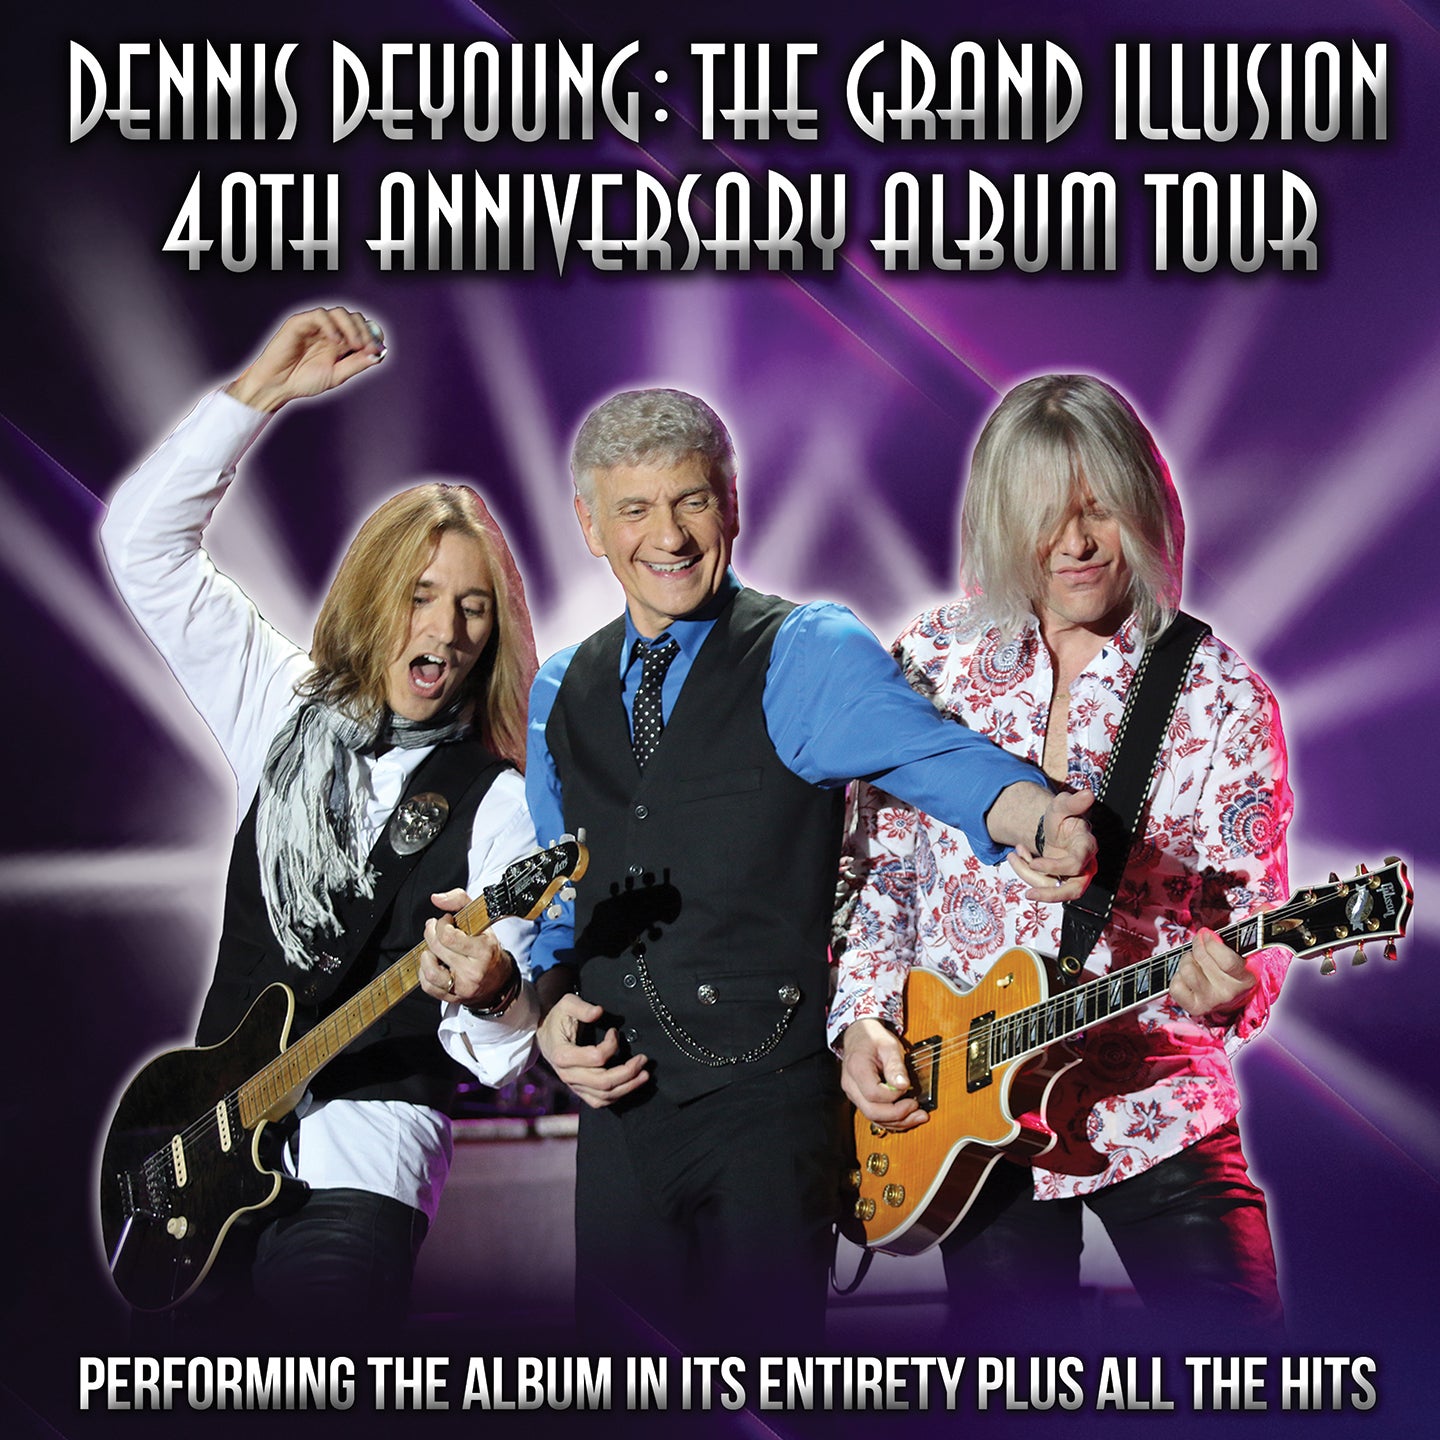 Dennis DeYoung: The Grand Illusion 40th Anniversary Album Tour